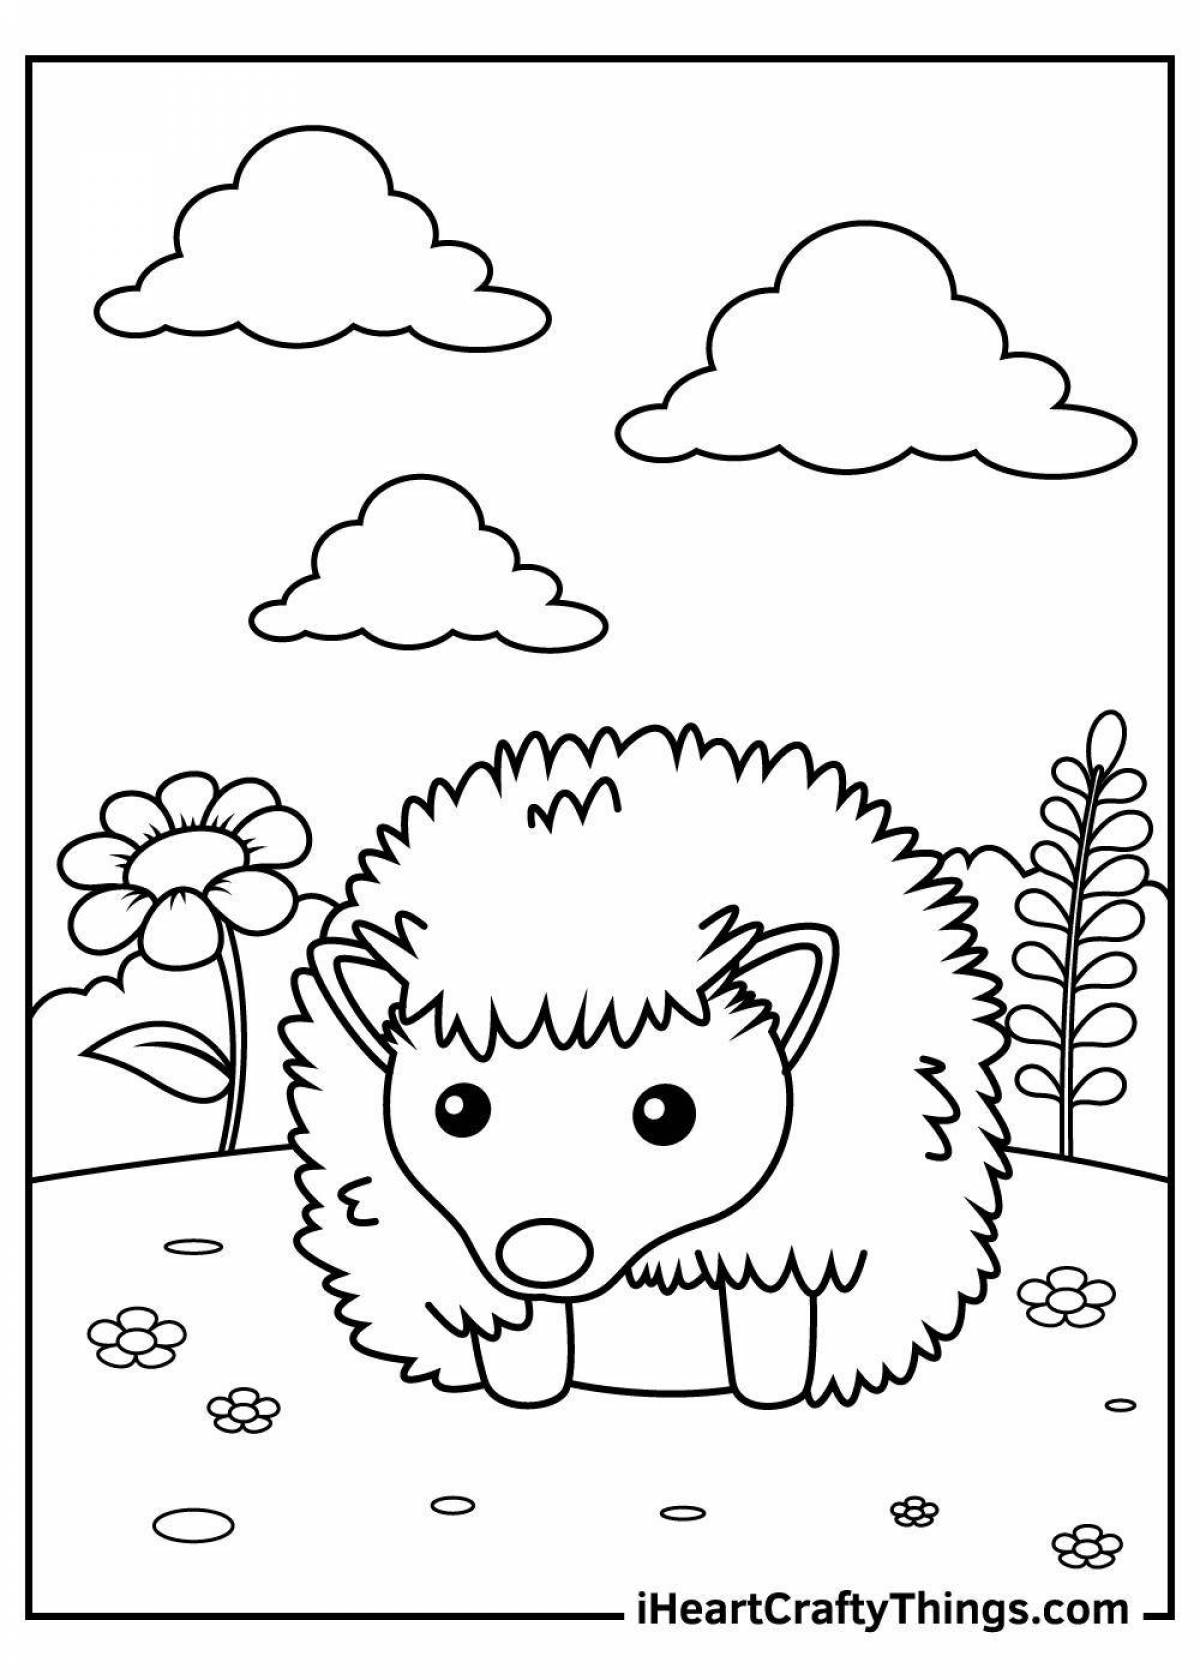 Delightful coloring hedgehog and teddy bear